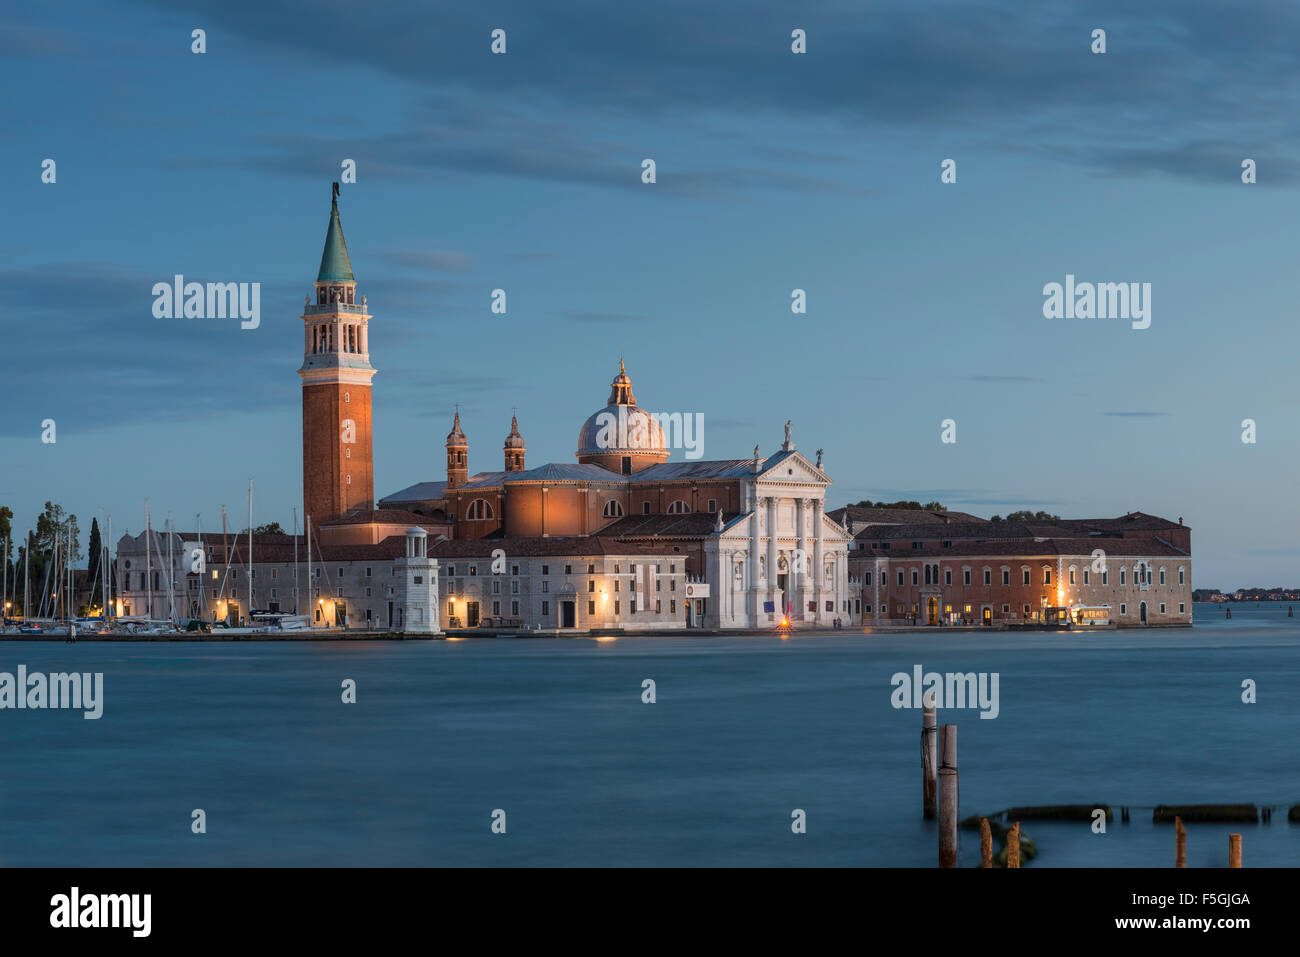 Insel San Giorgio Maggiore mit Kloster und Kirche, Abendlicht, Bacino di San Marco, die Lagune von Venedig, Venedig, Venezia, Italien Stockfoto